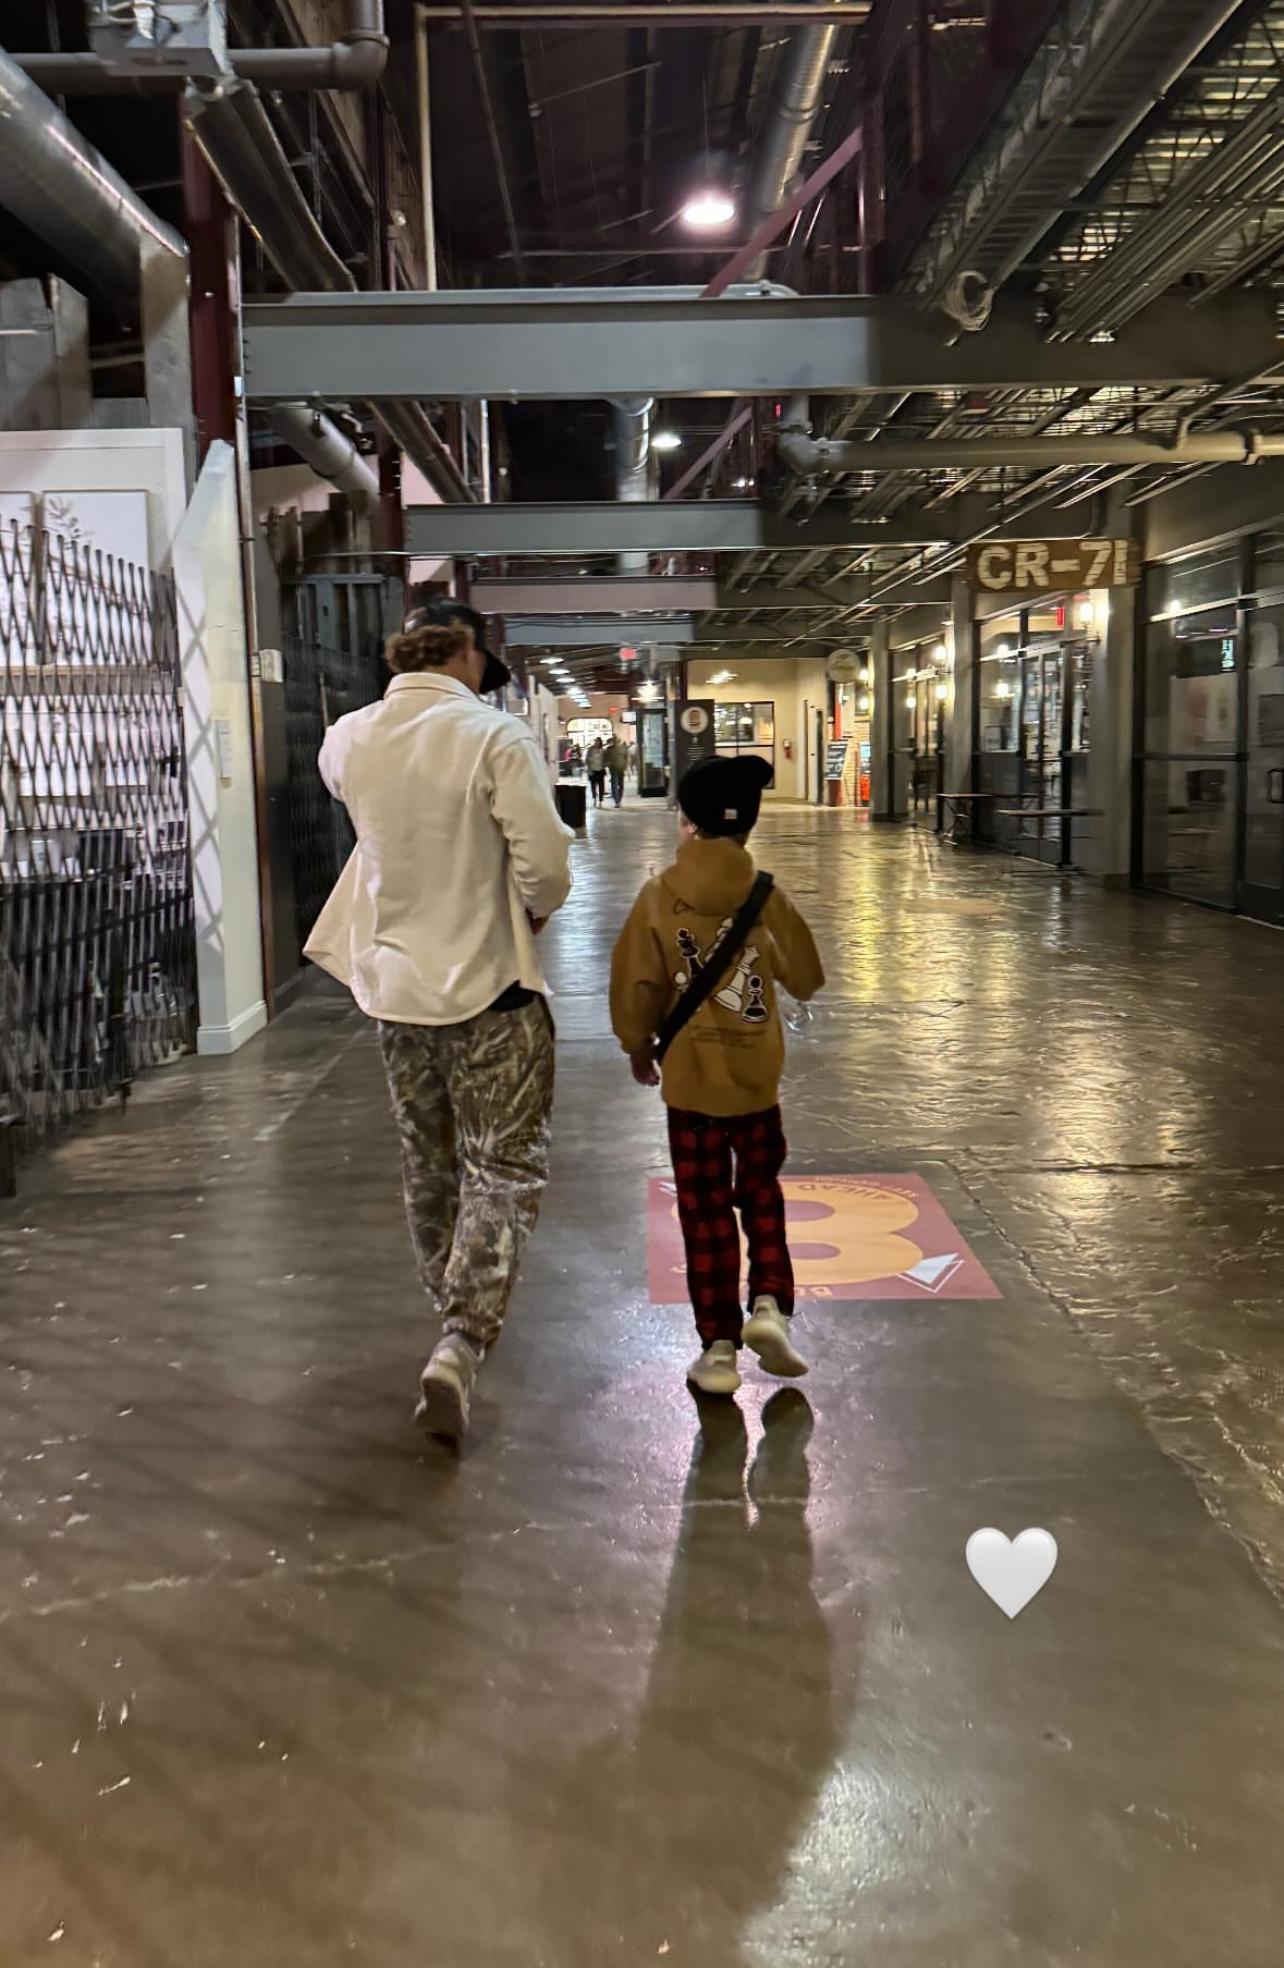 Kristin Cavallari Shares Photo Of New BF Mark Estes Already Bonding With Her Son